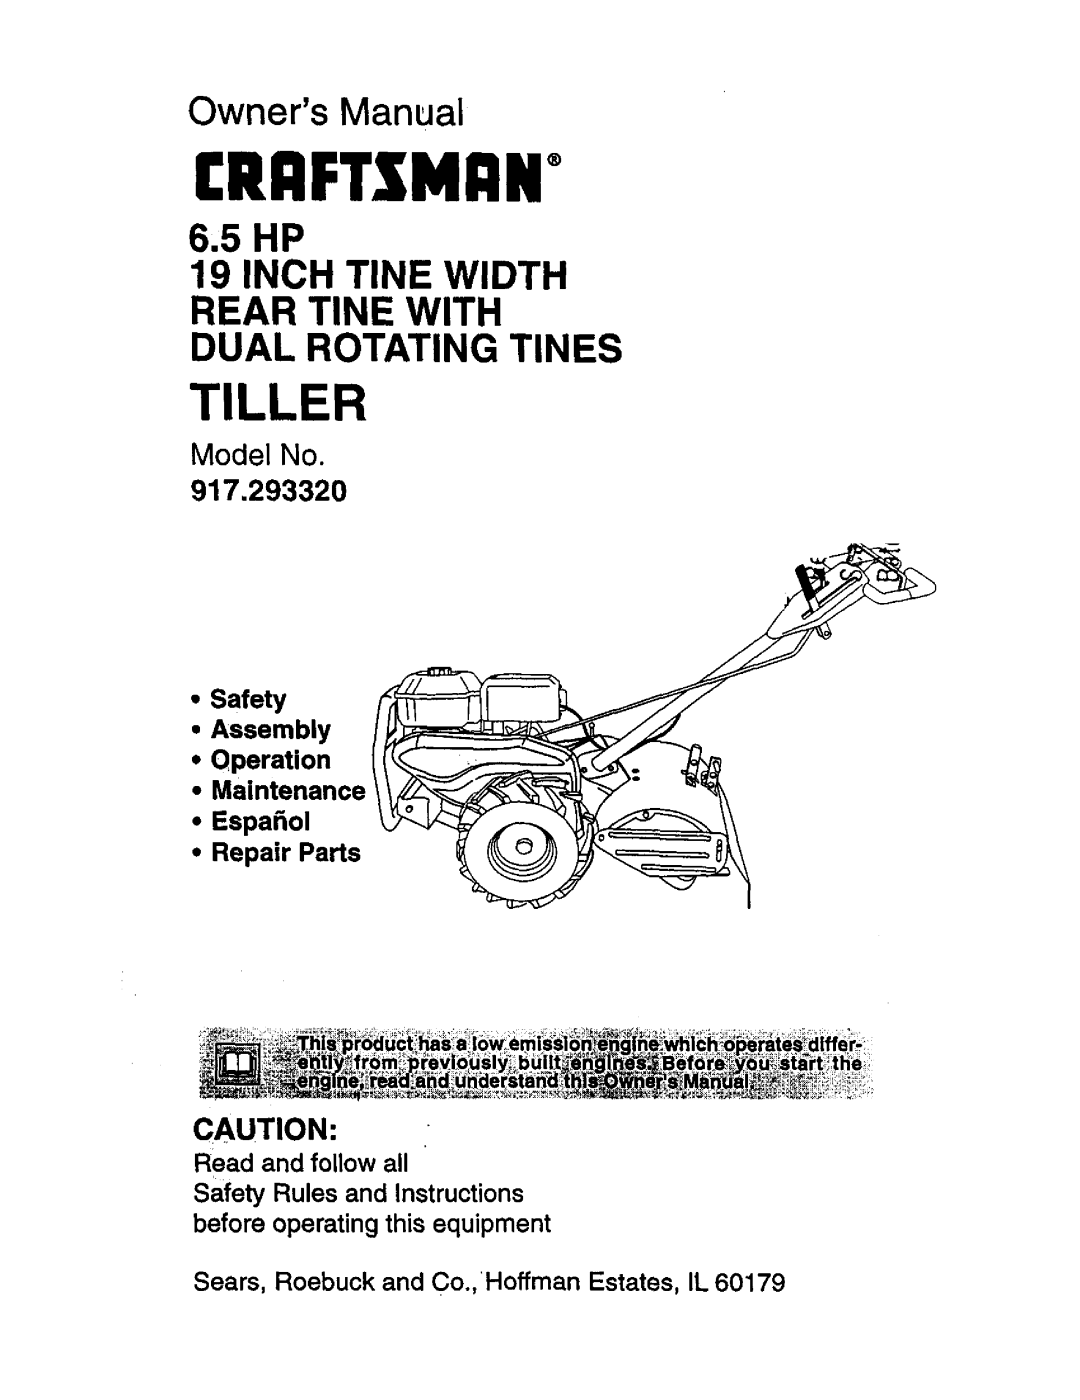 Craftsman owner manual Model No, 917.293320, Safety Assembly Operation Maintenance, Espa ol Repair Parts, Craftsman 